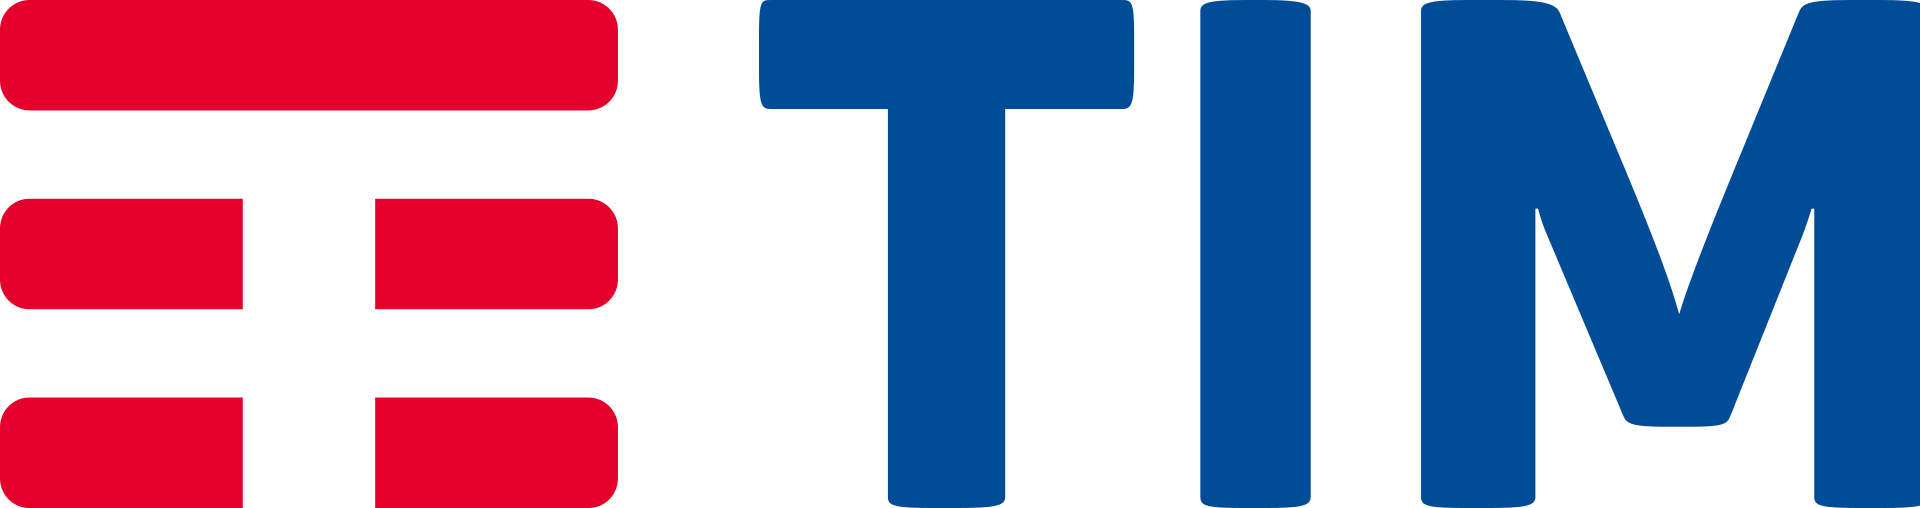 Telecom Italia - Telecom Italia Mobile - TIM